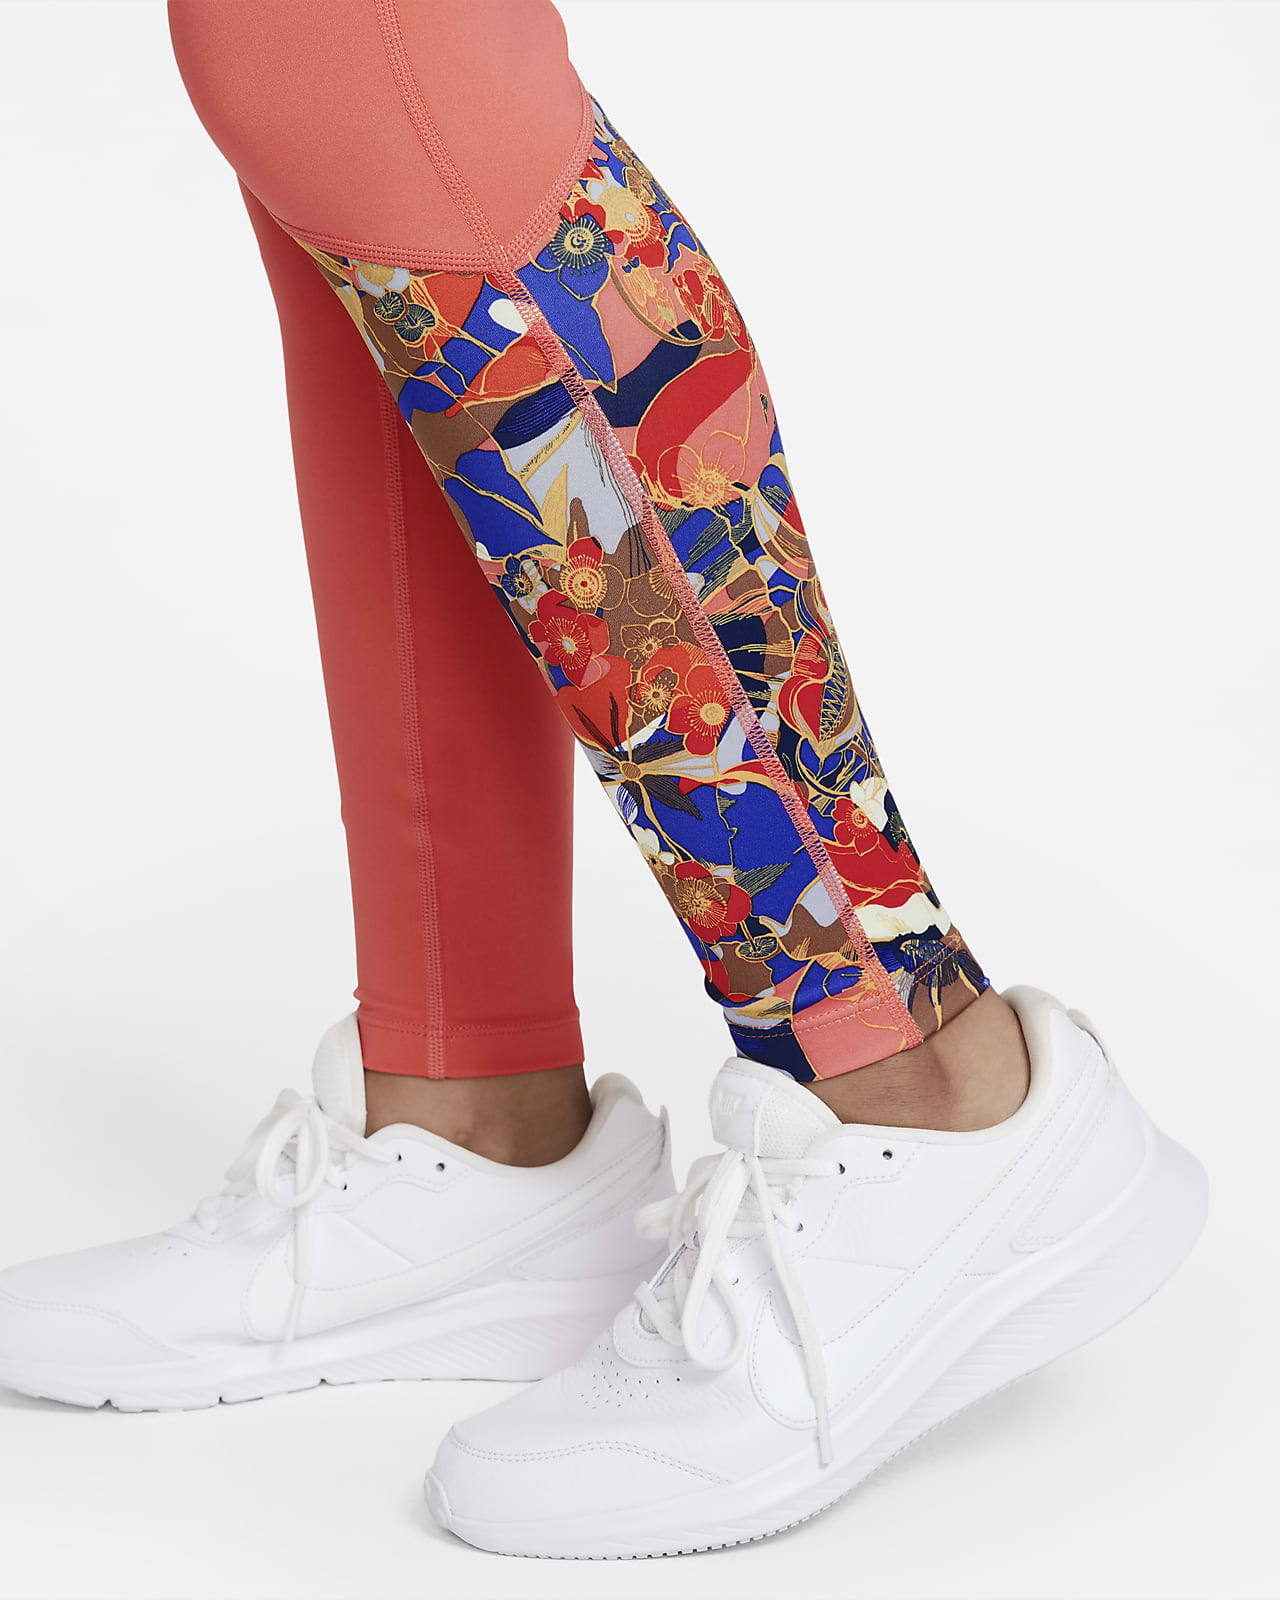 Nike Women's Power Floral-Print Dri-FIT Leggings - Macy's